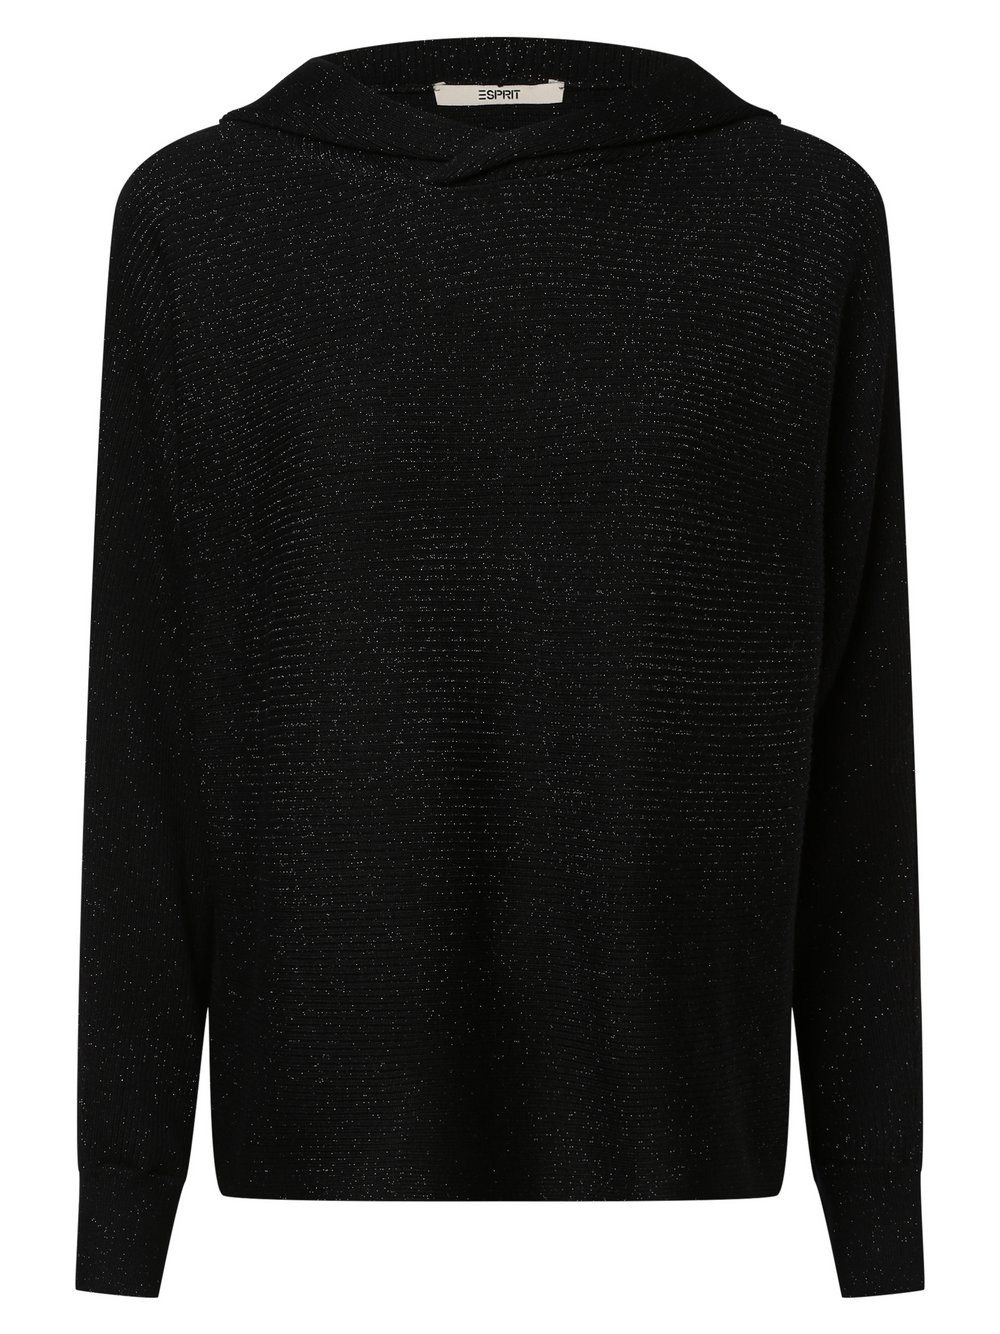 Esprit Casual - Damska bluza z kapturem, czarny